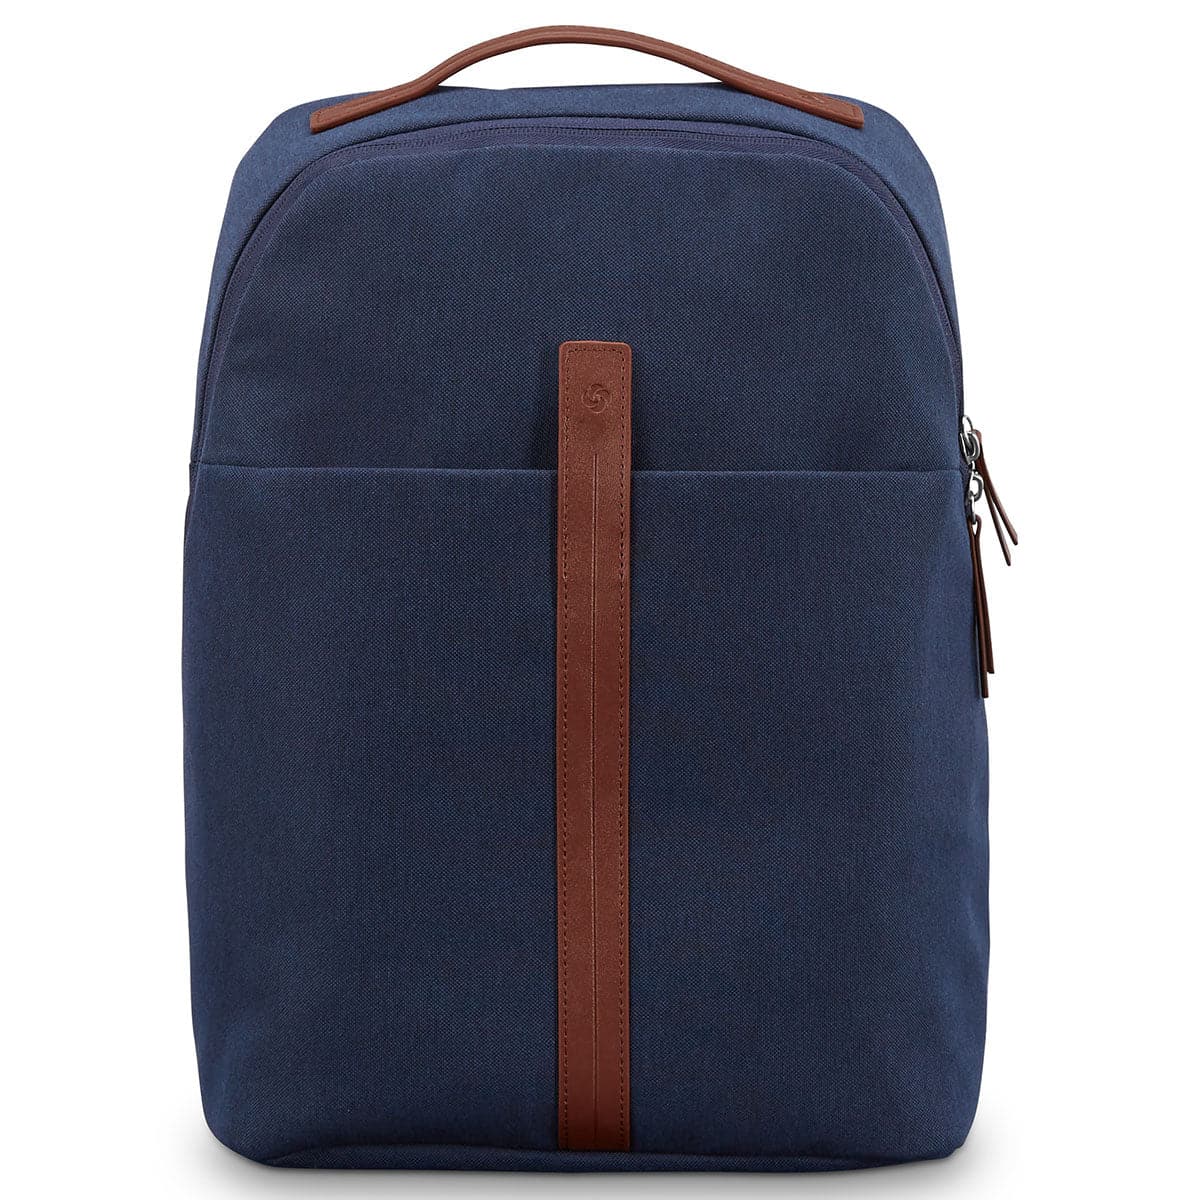 Samsonite Virtuosa Backpack